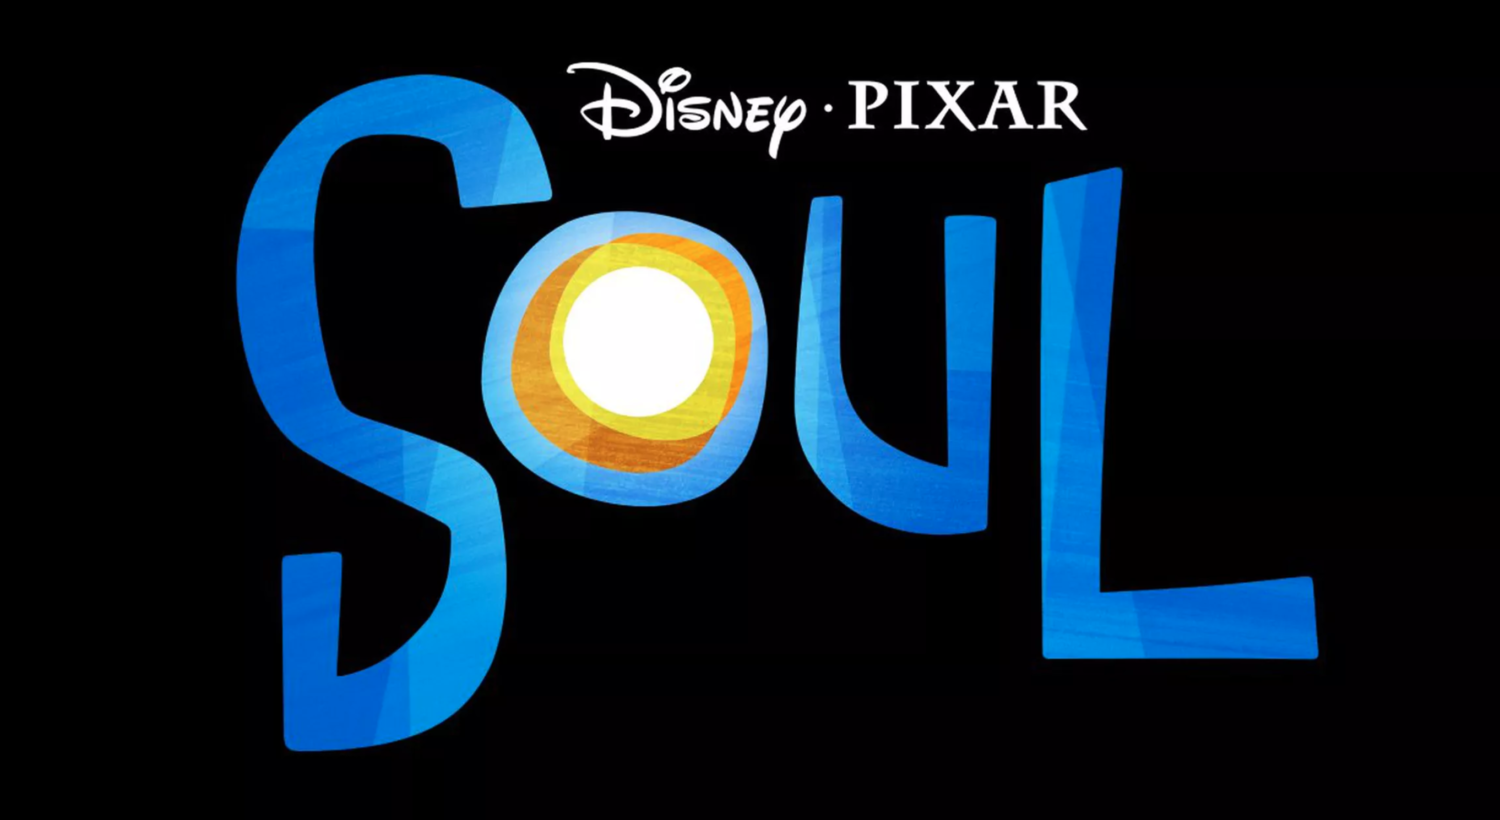 Disney/Pixar Soul